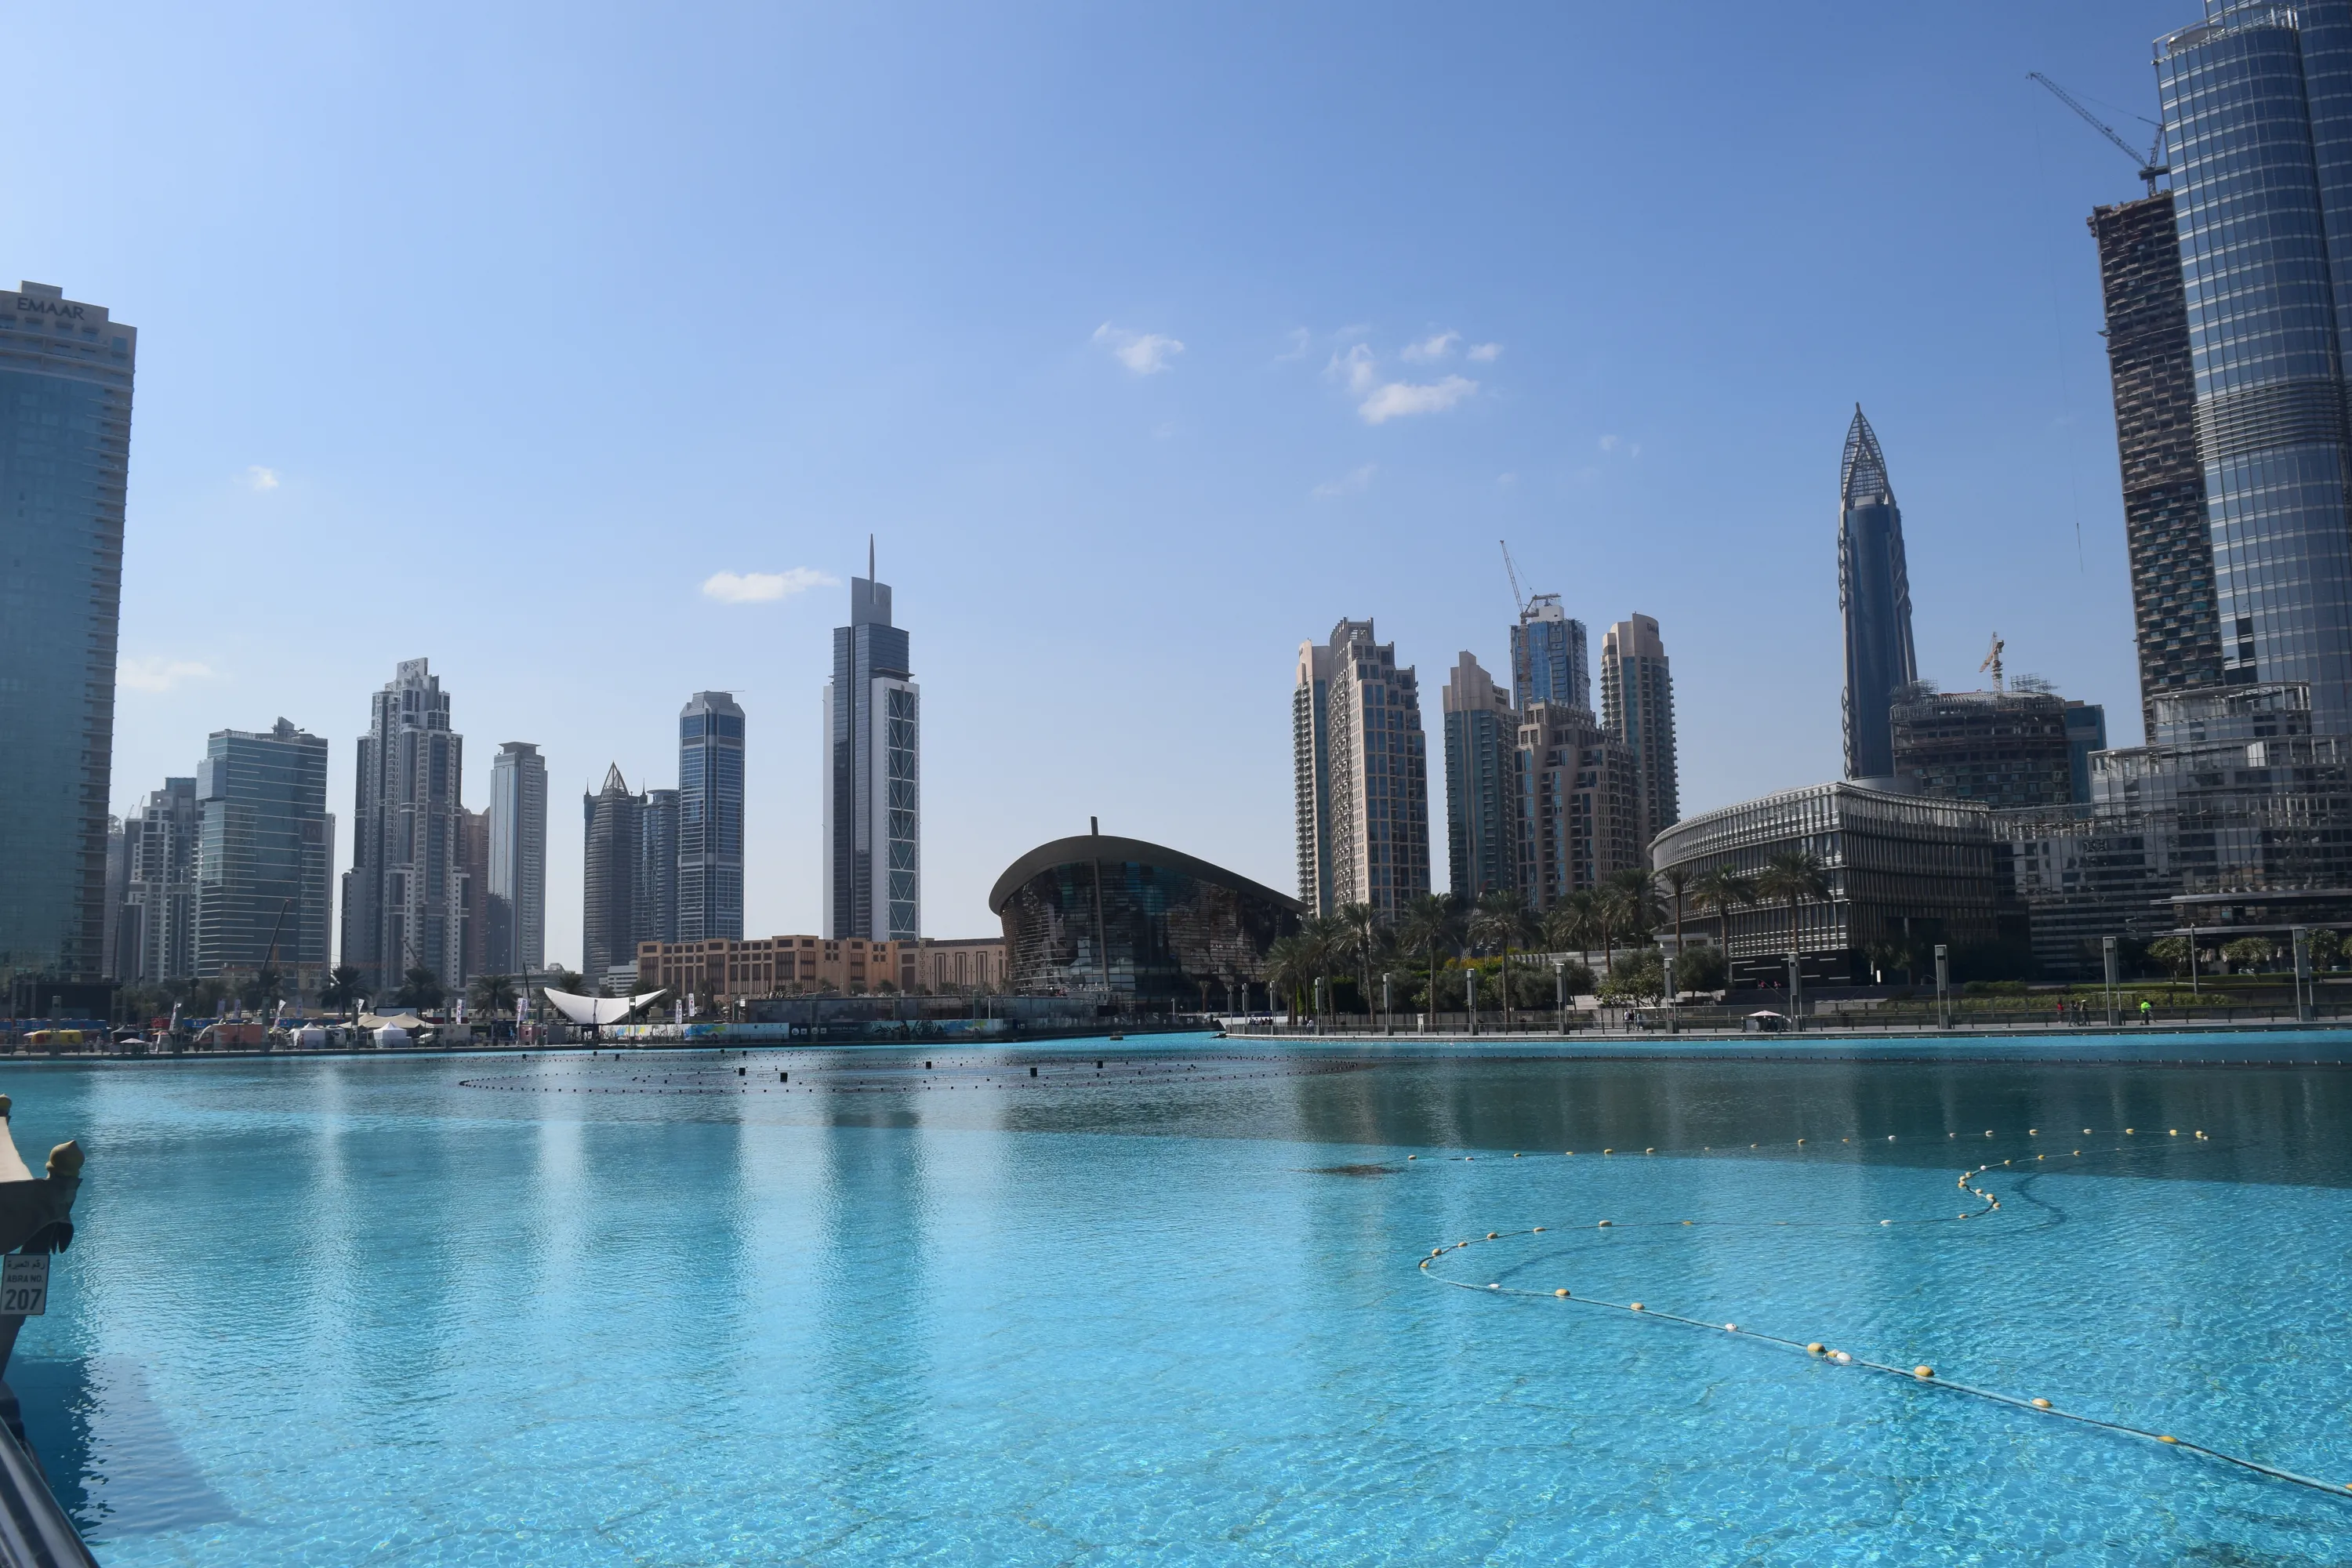 Dubai Fountains and Opera beyond